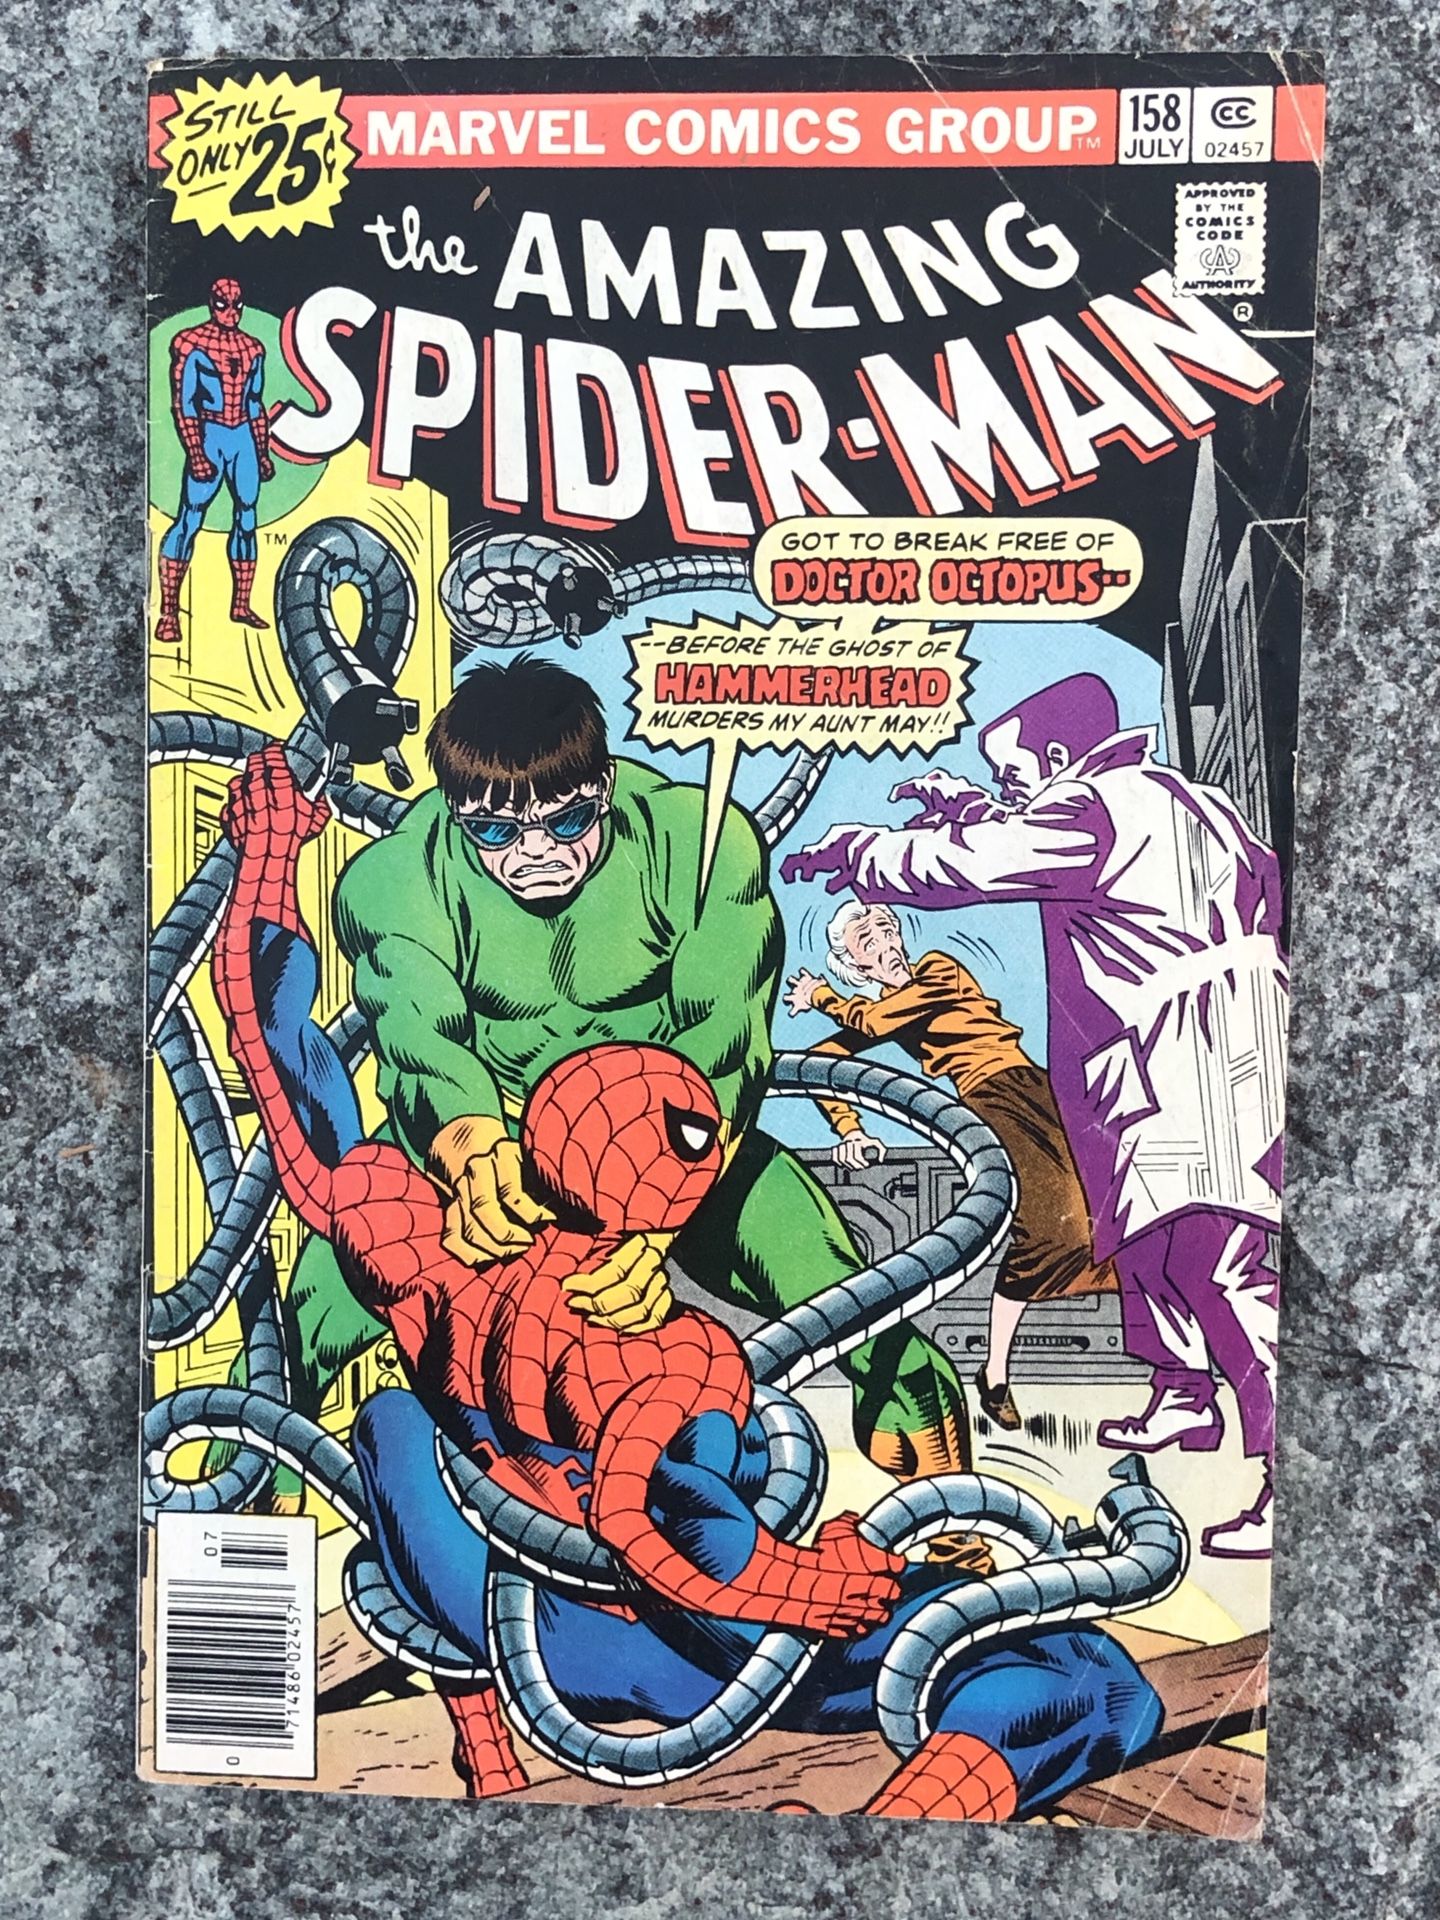 The Amazing Spider Man #158